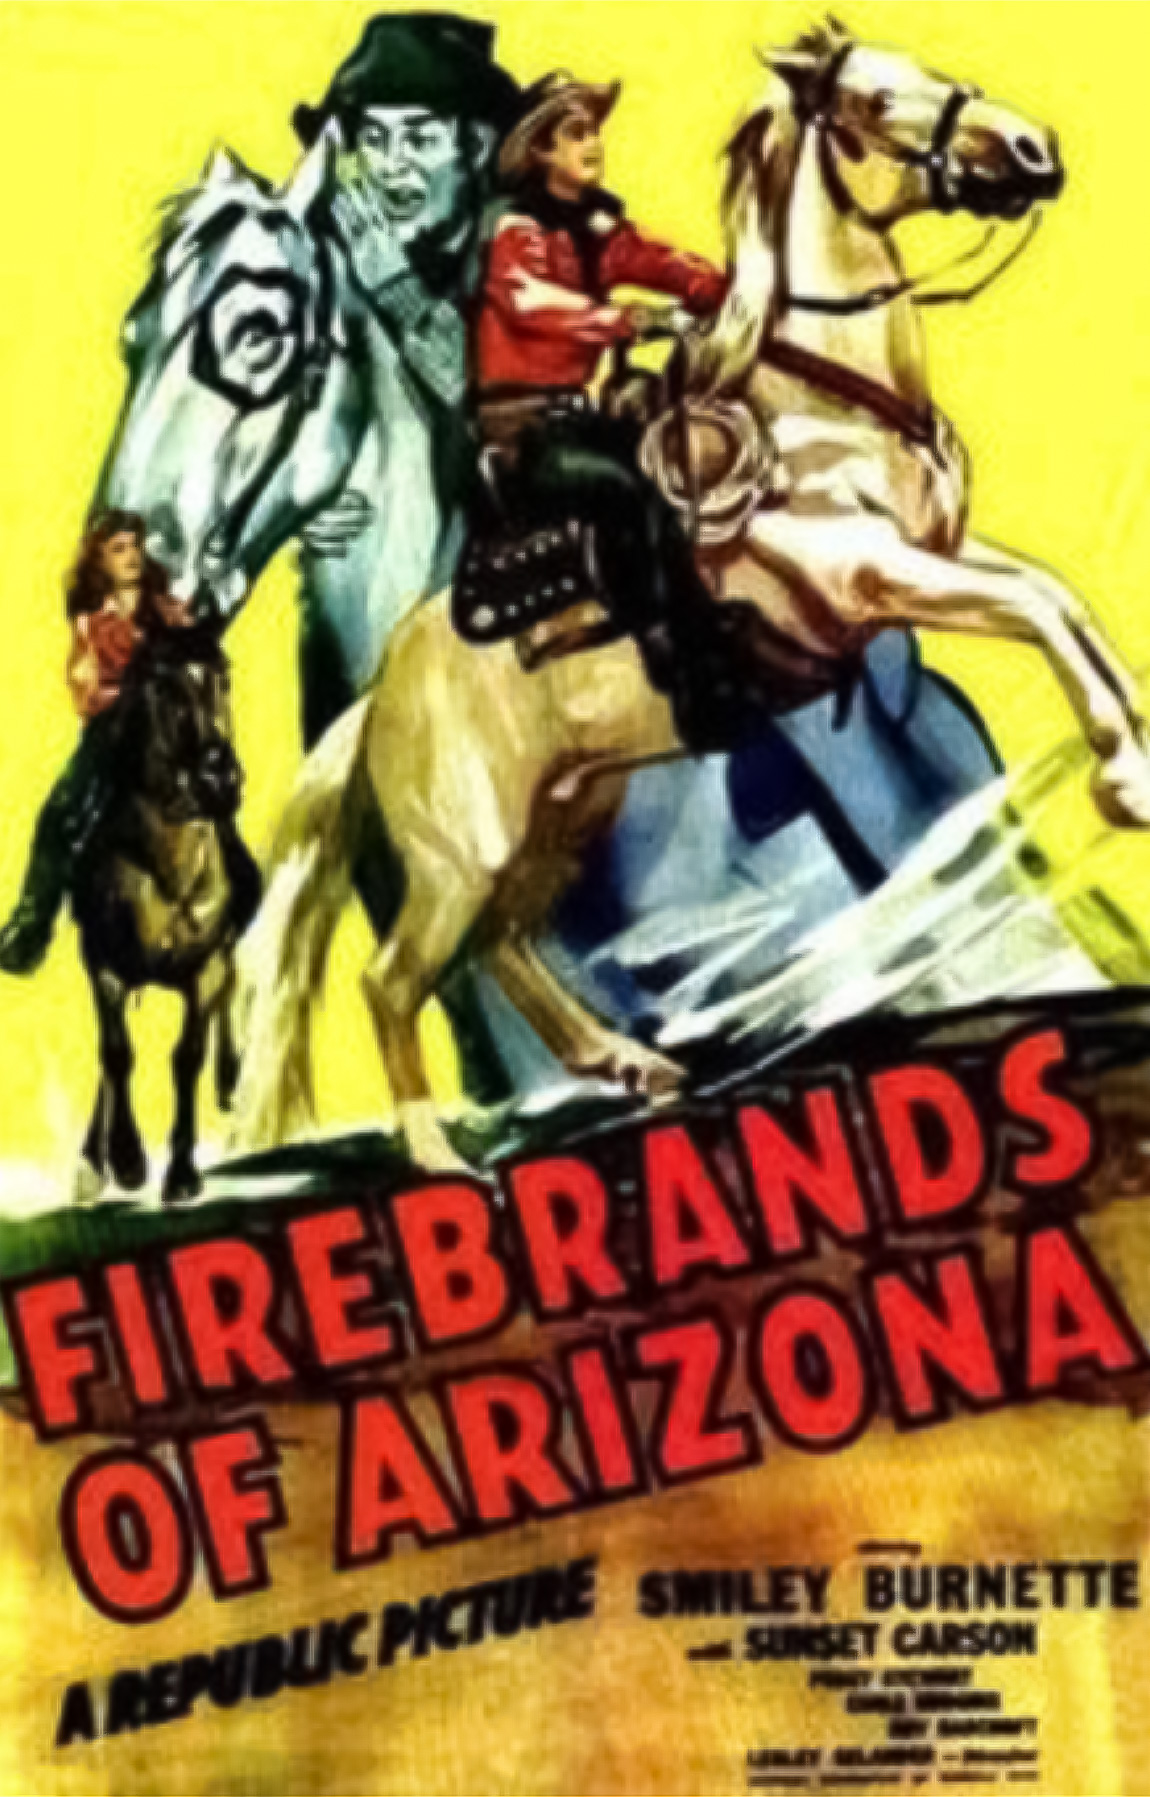 Firebrands of Arizona